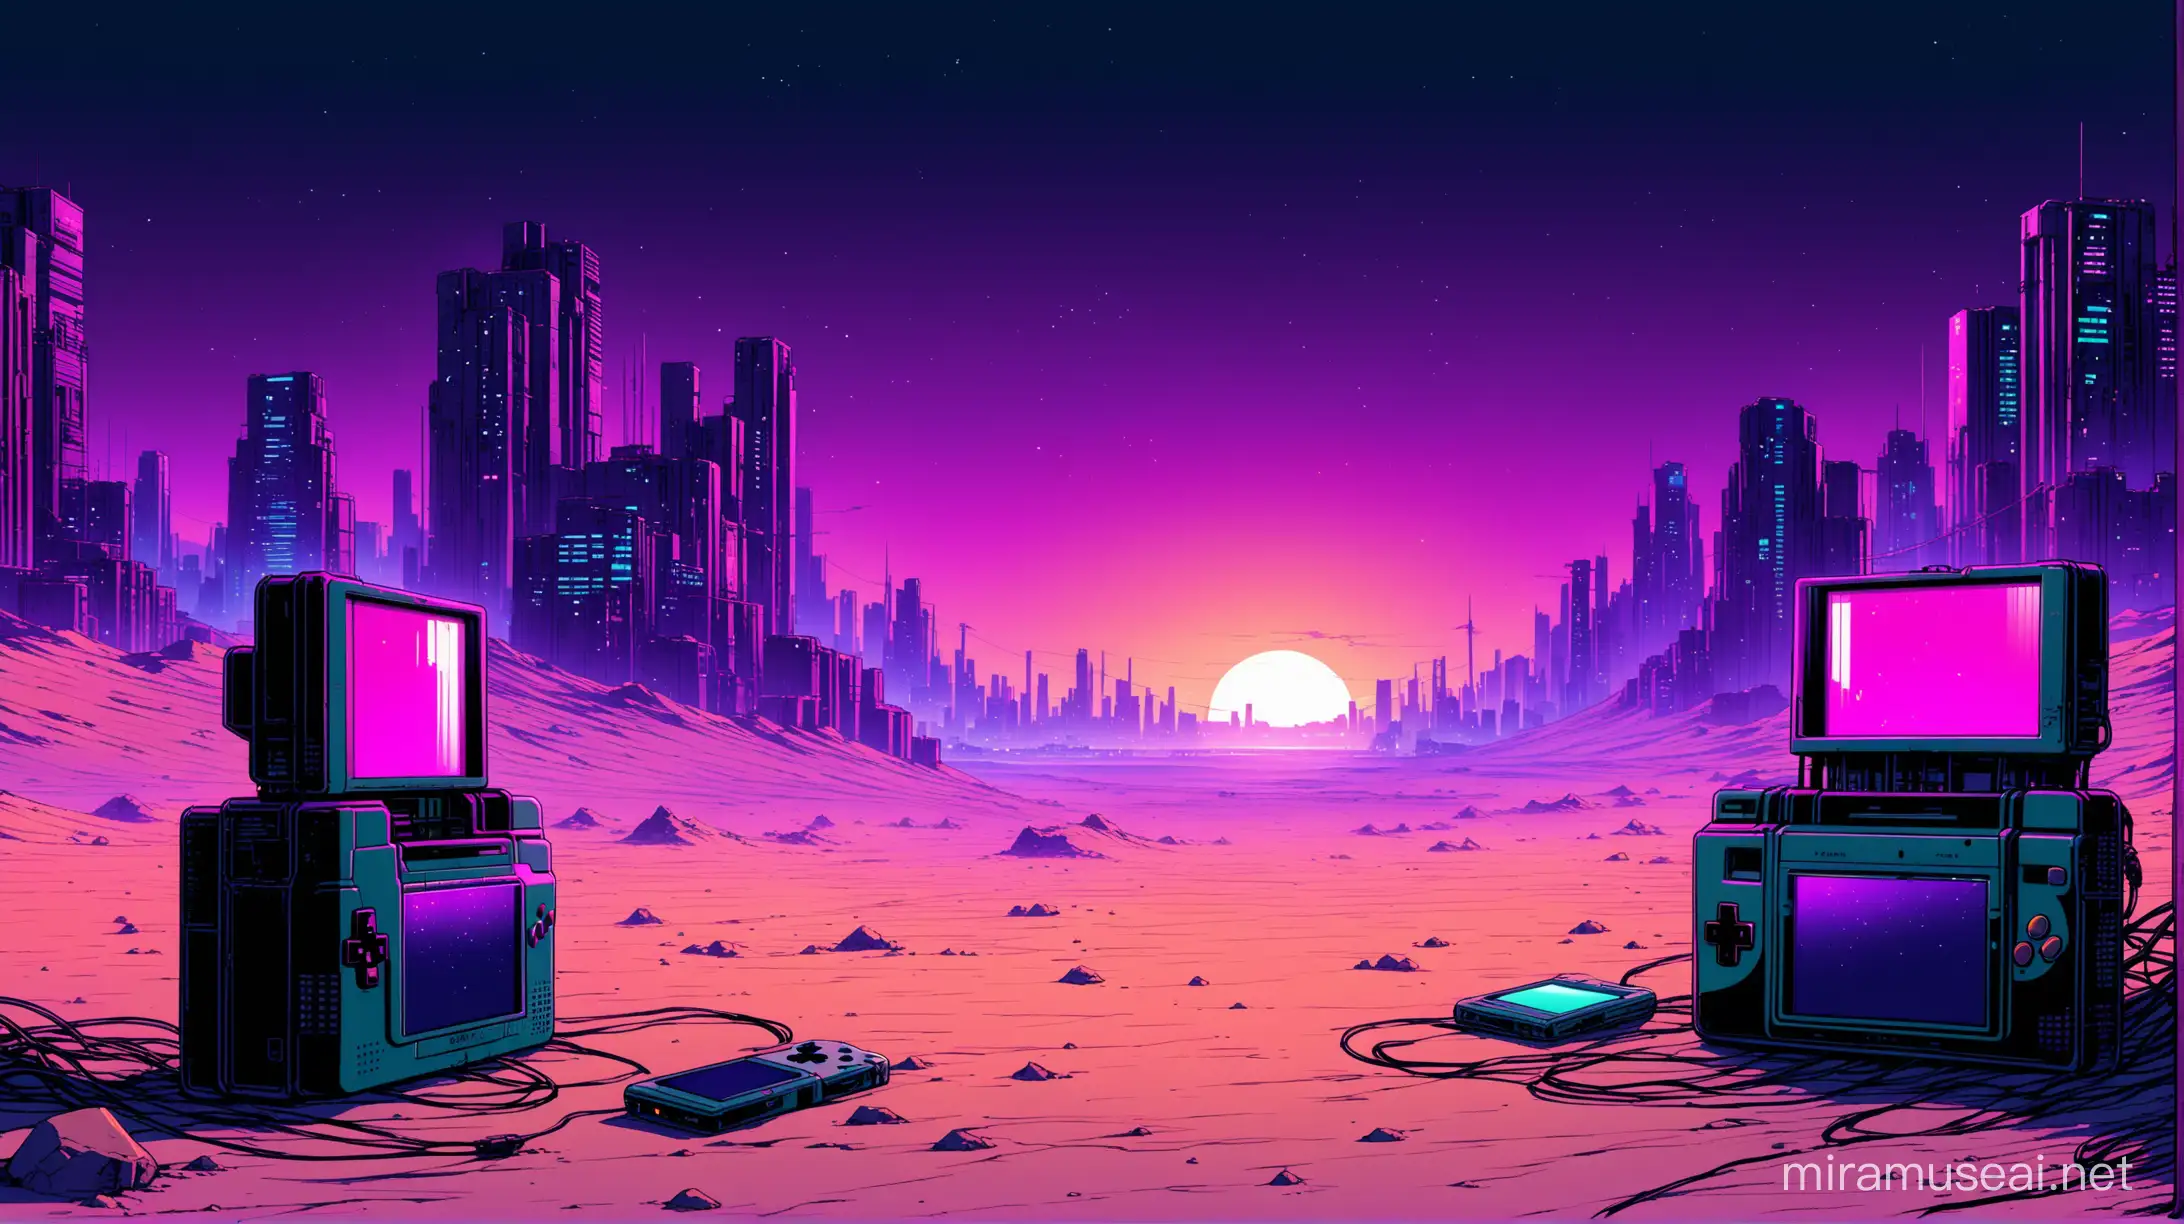 Lost Gameboy in Deserted Cyberpunk Cityscape